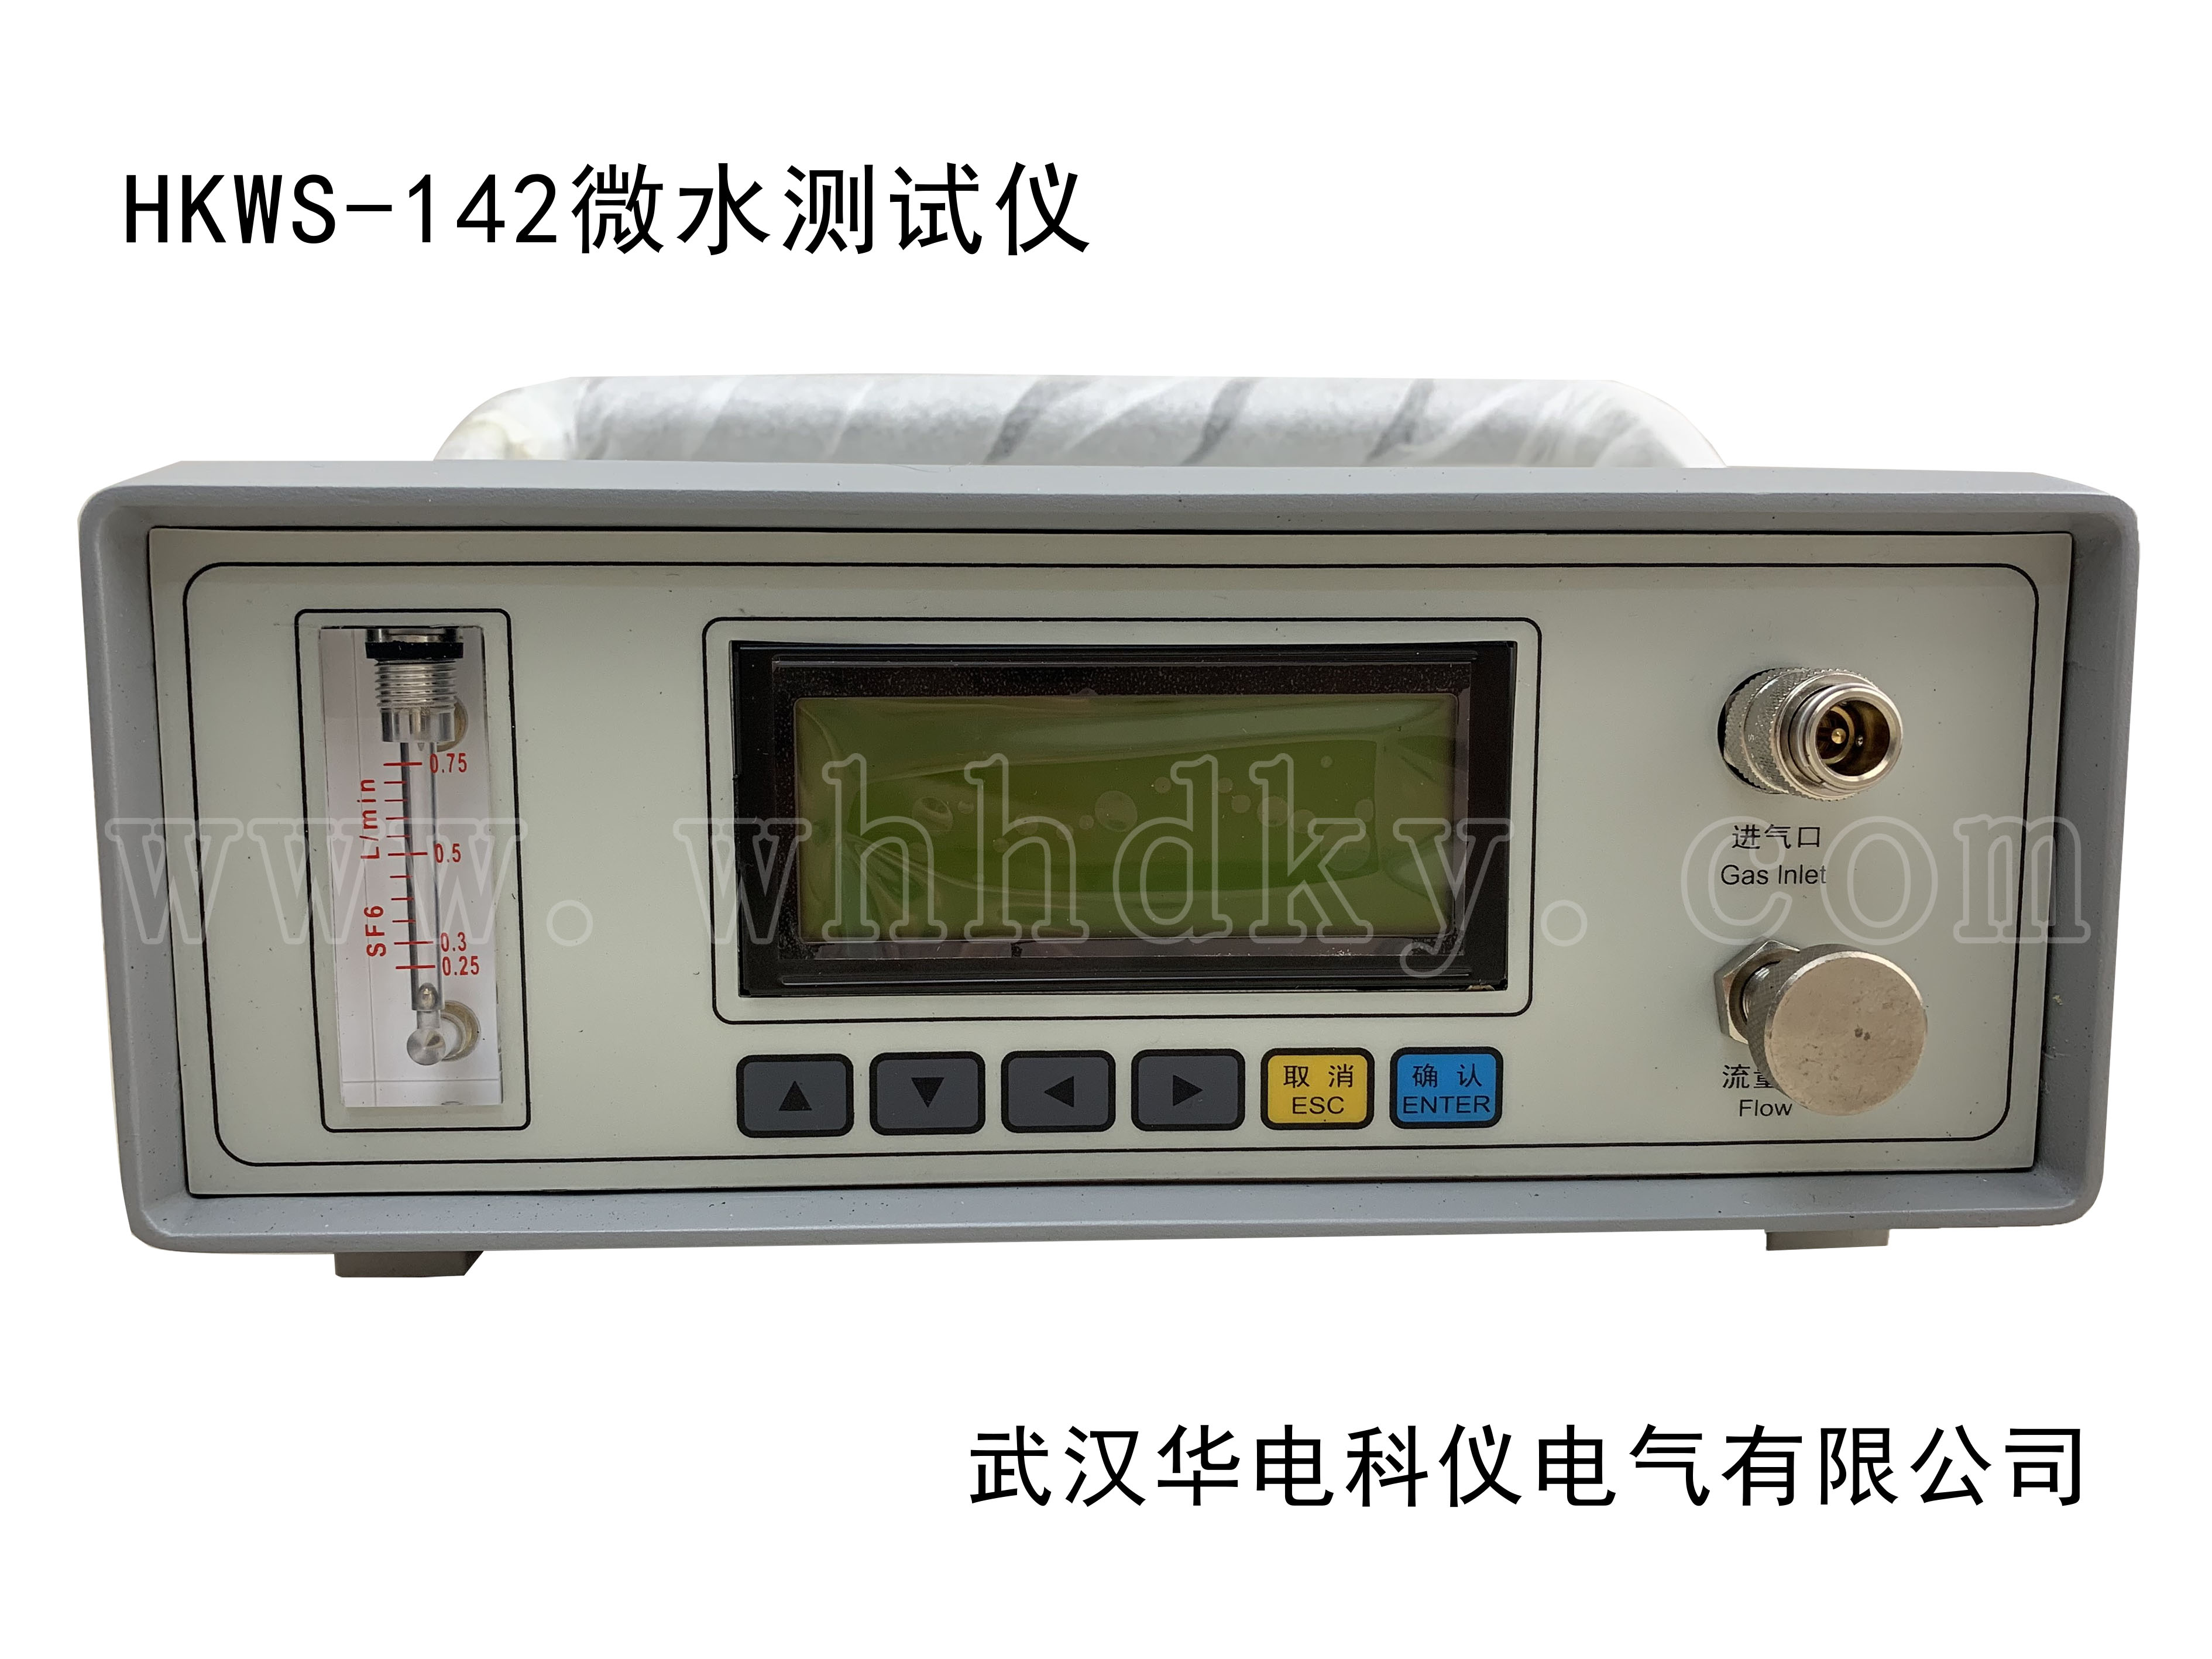 HKWS-142 SF6微水测量仪